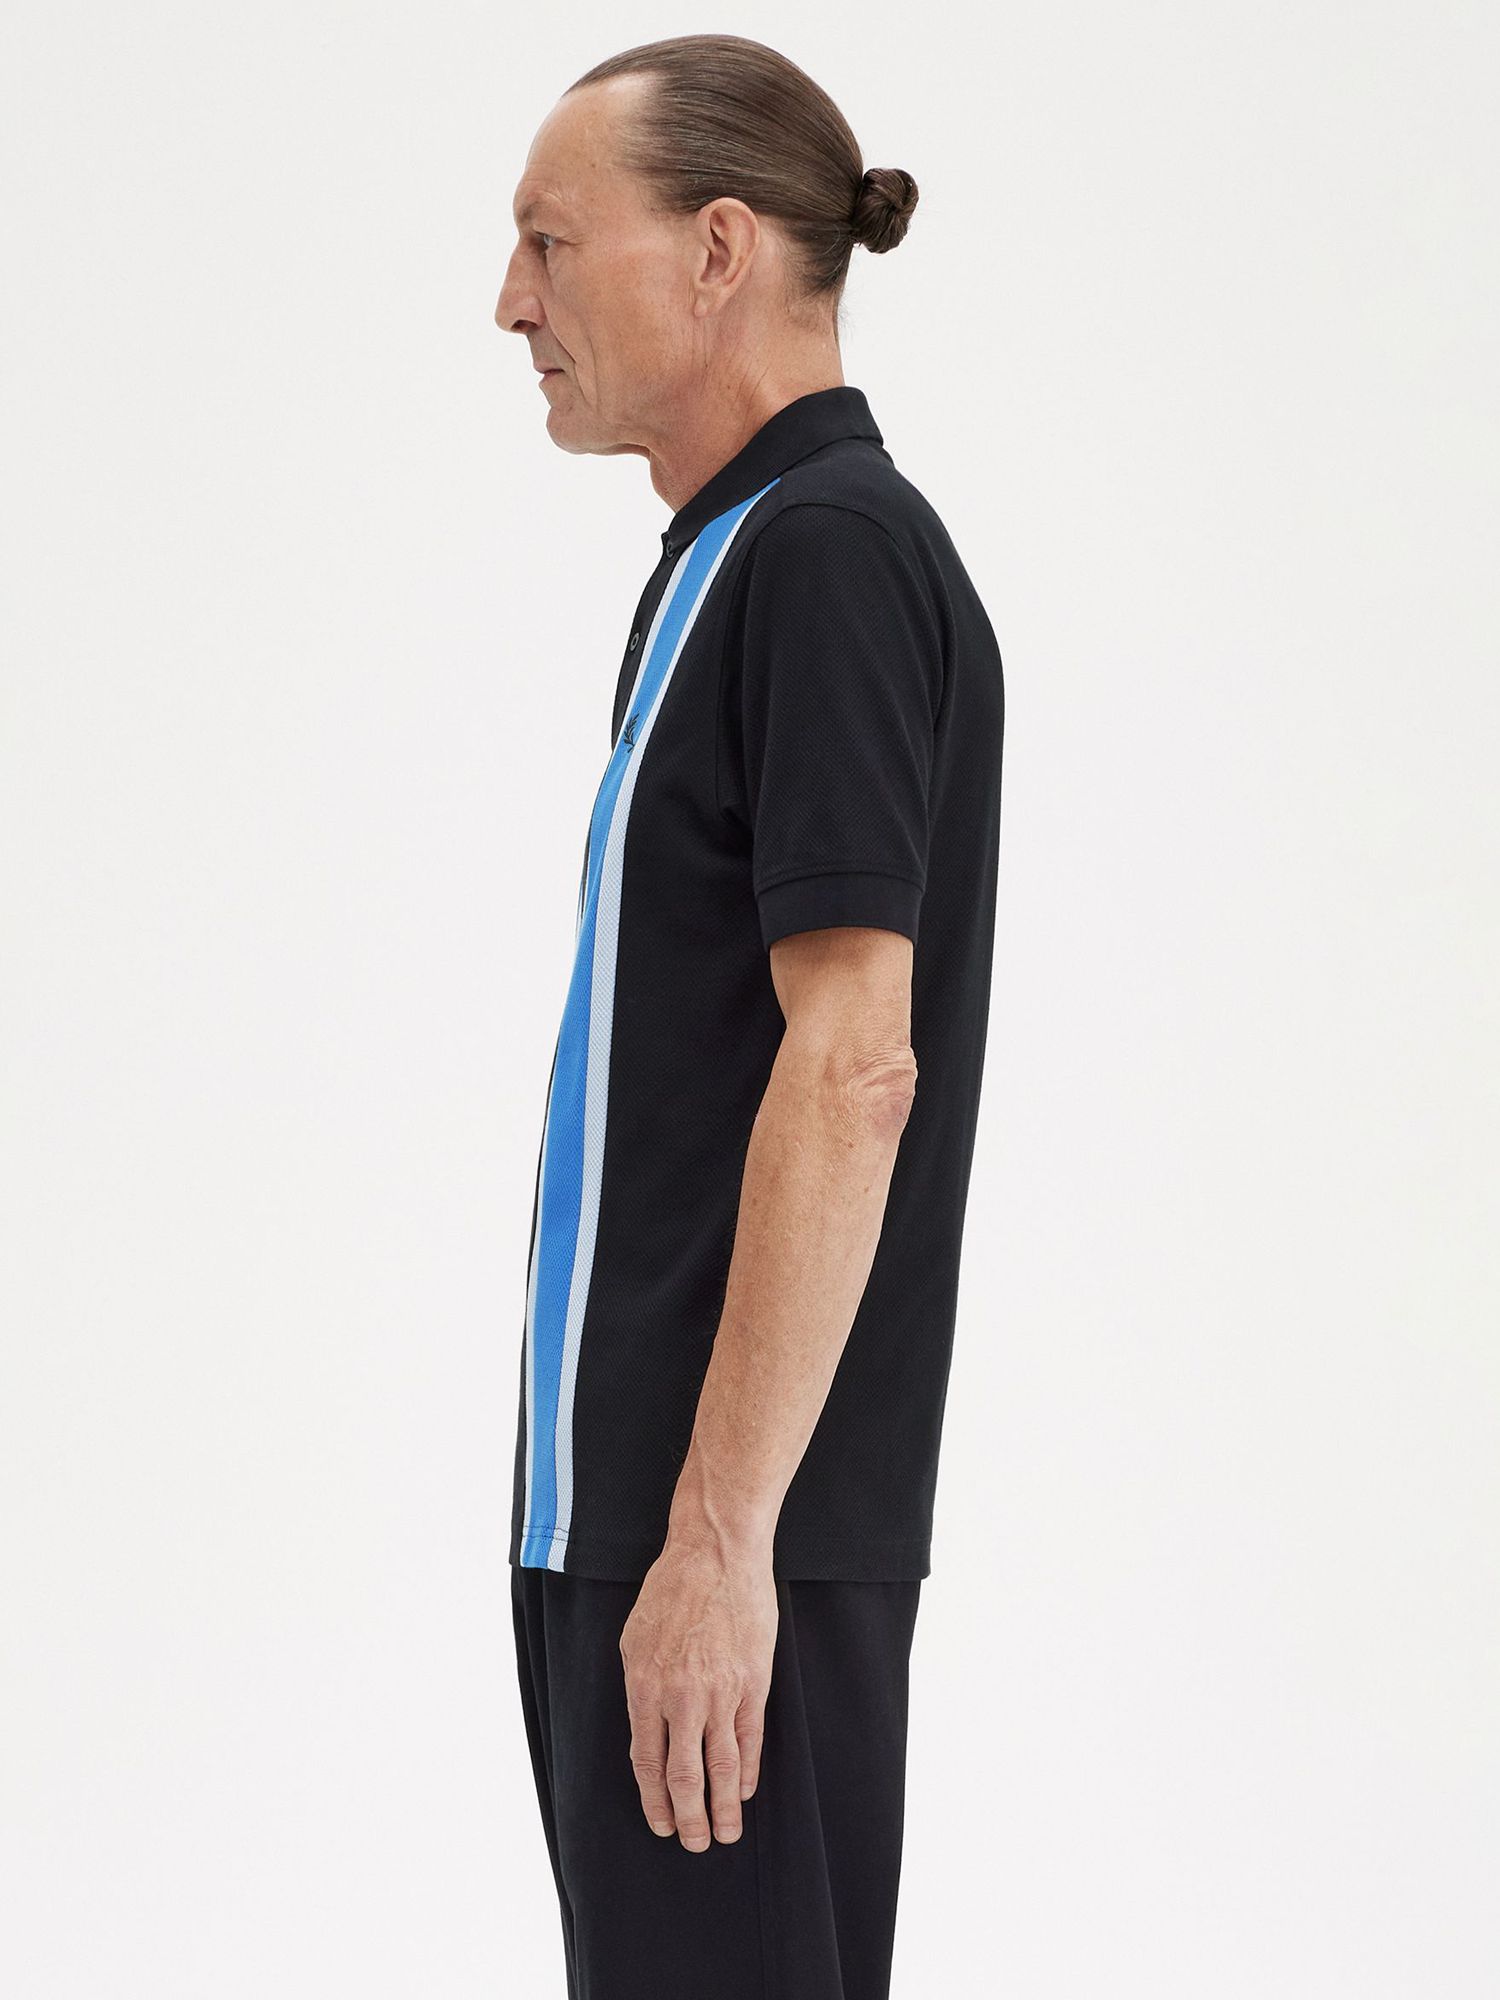 Fred Perry Mesh Relax Polo Shirt, Black/Blue, XXL